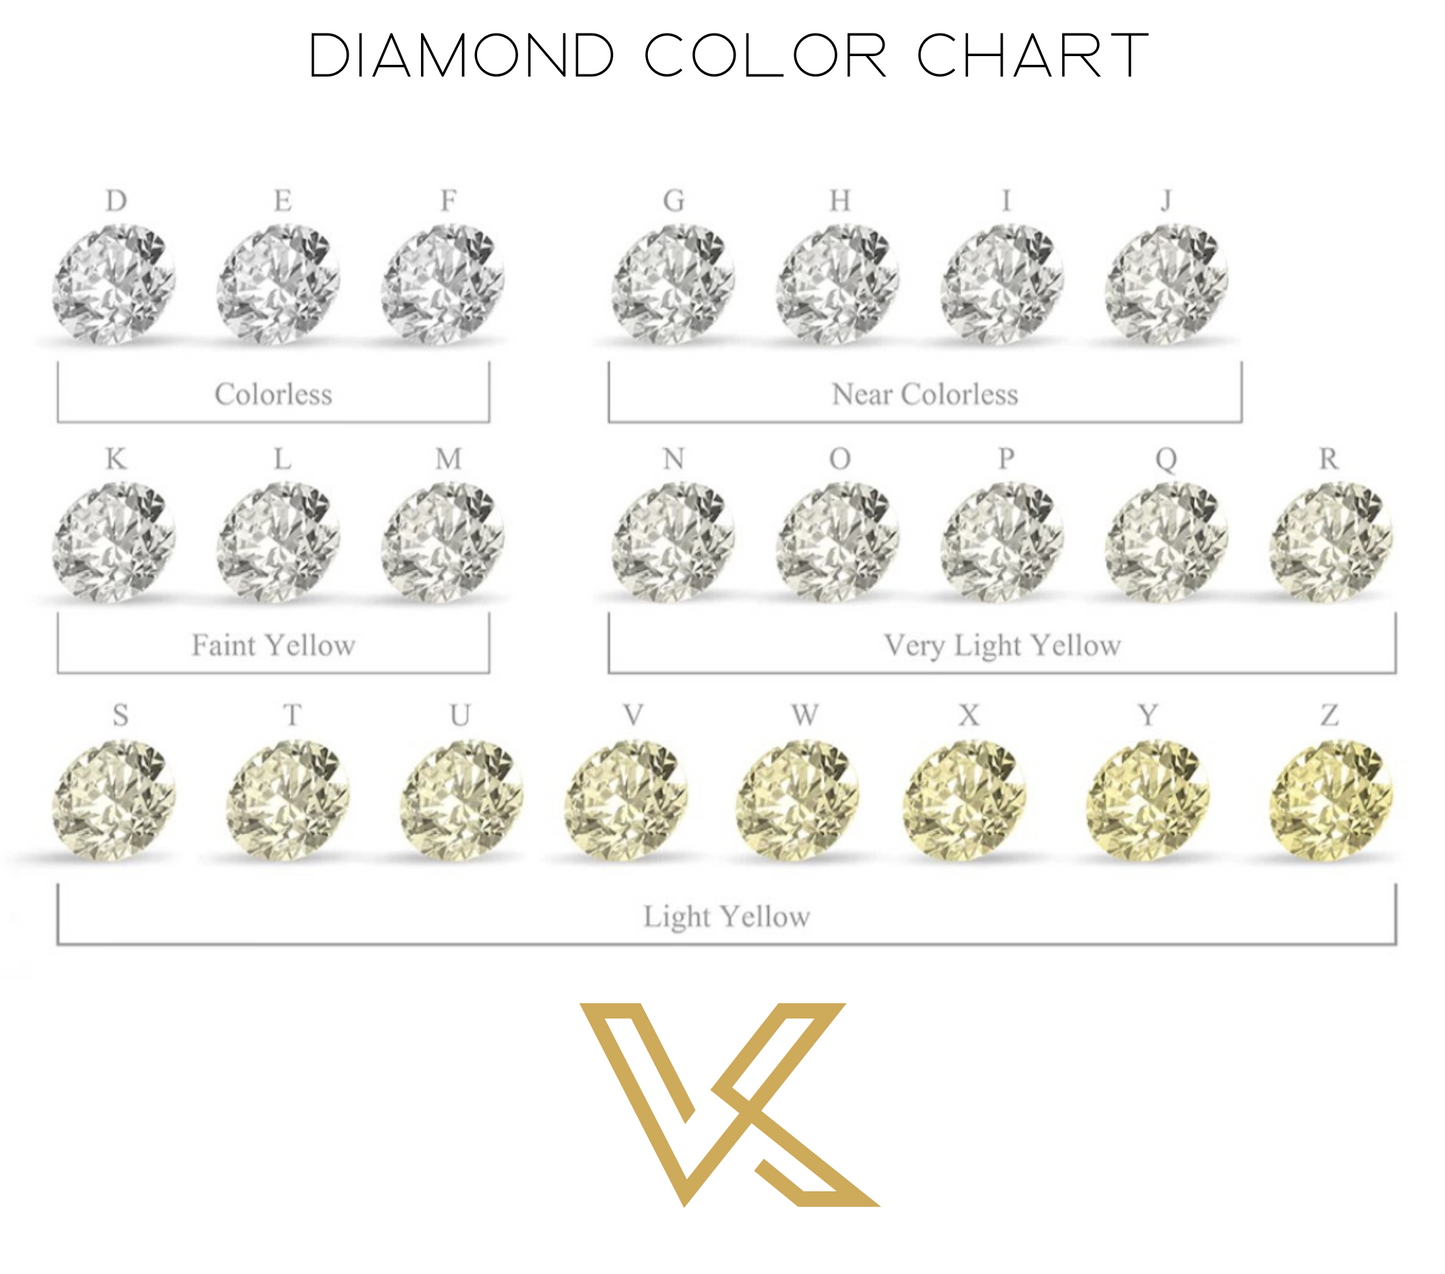 Kaufen Sie losen Diamanten 0,50 Karat. Kissenschnitt. D VS1 – IGI-zertifiziert